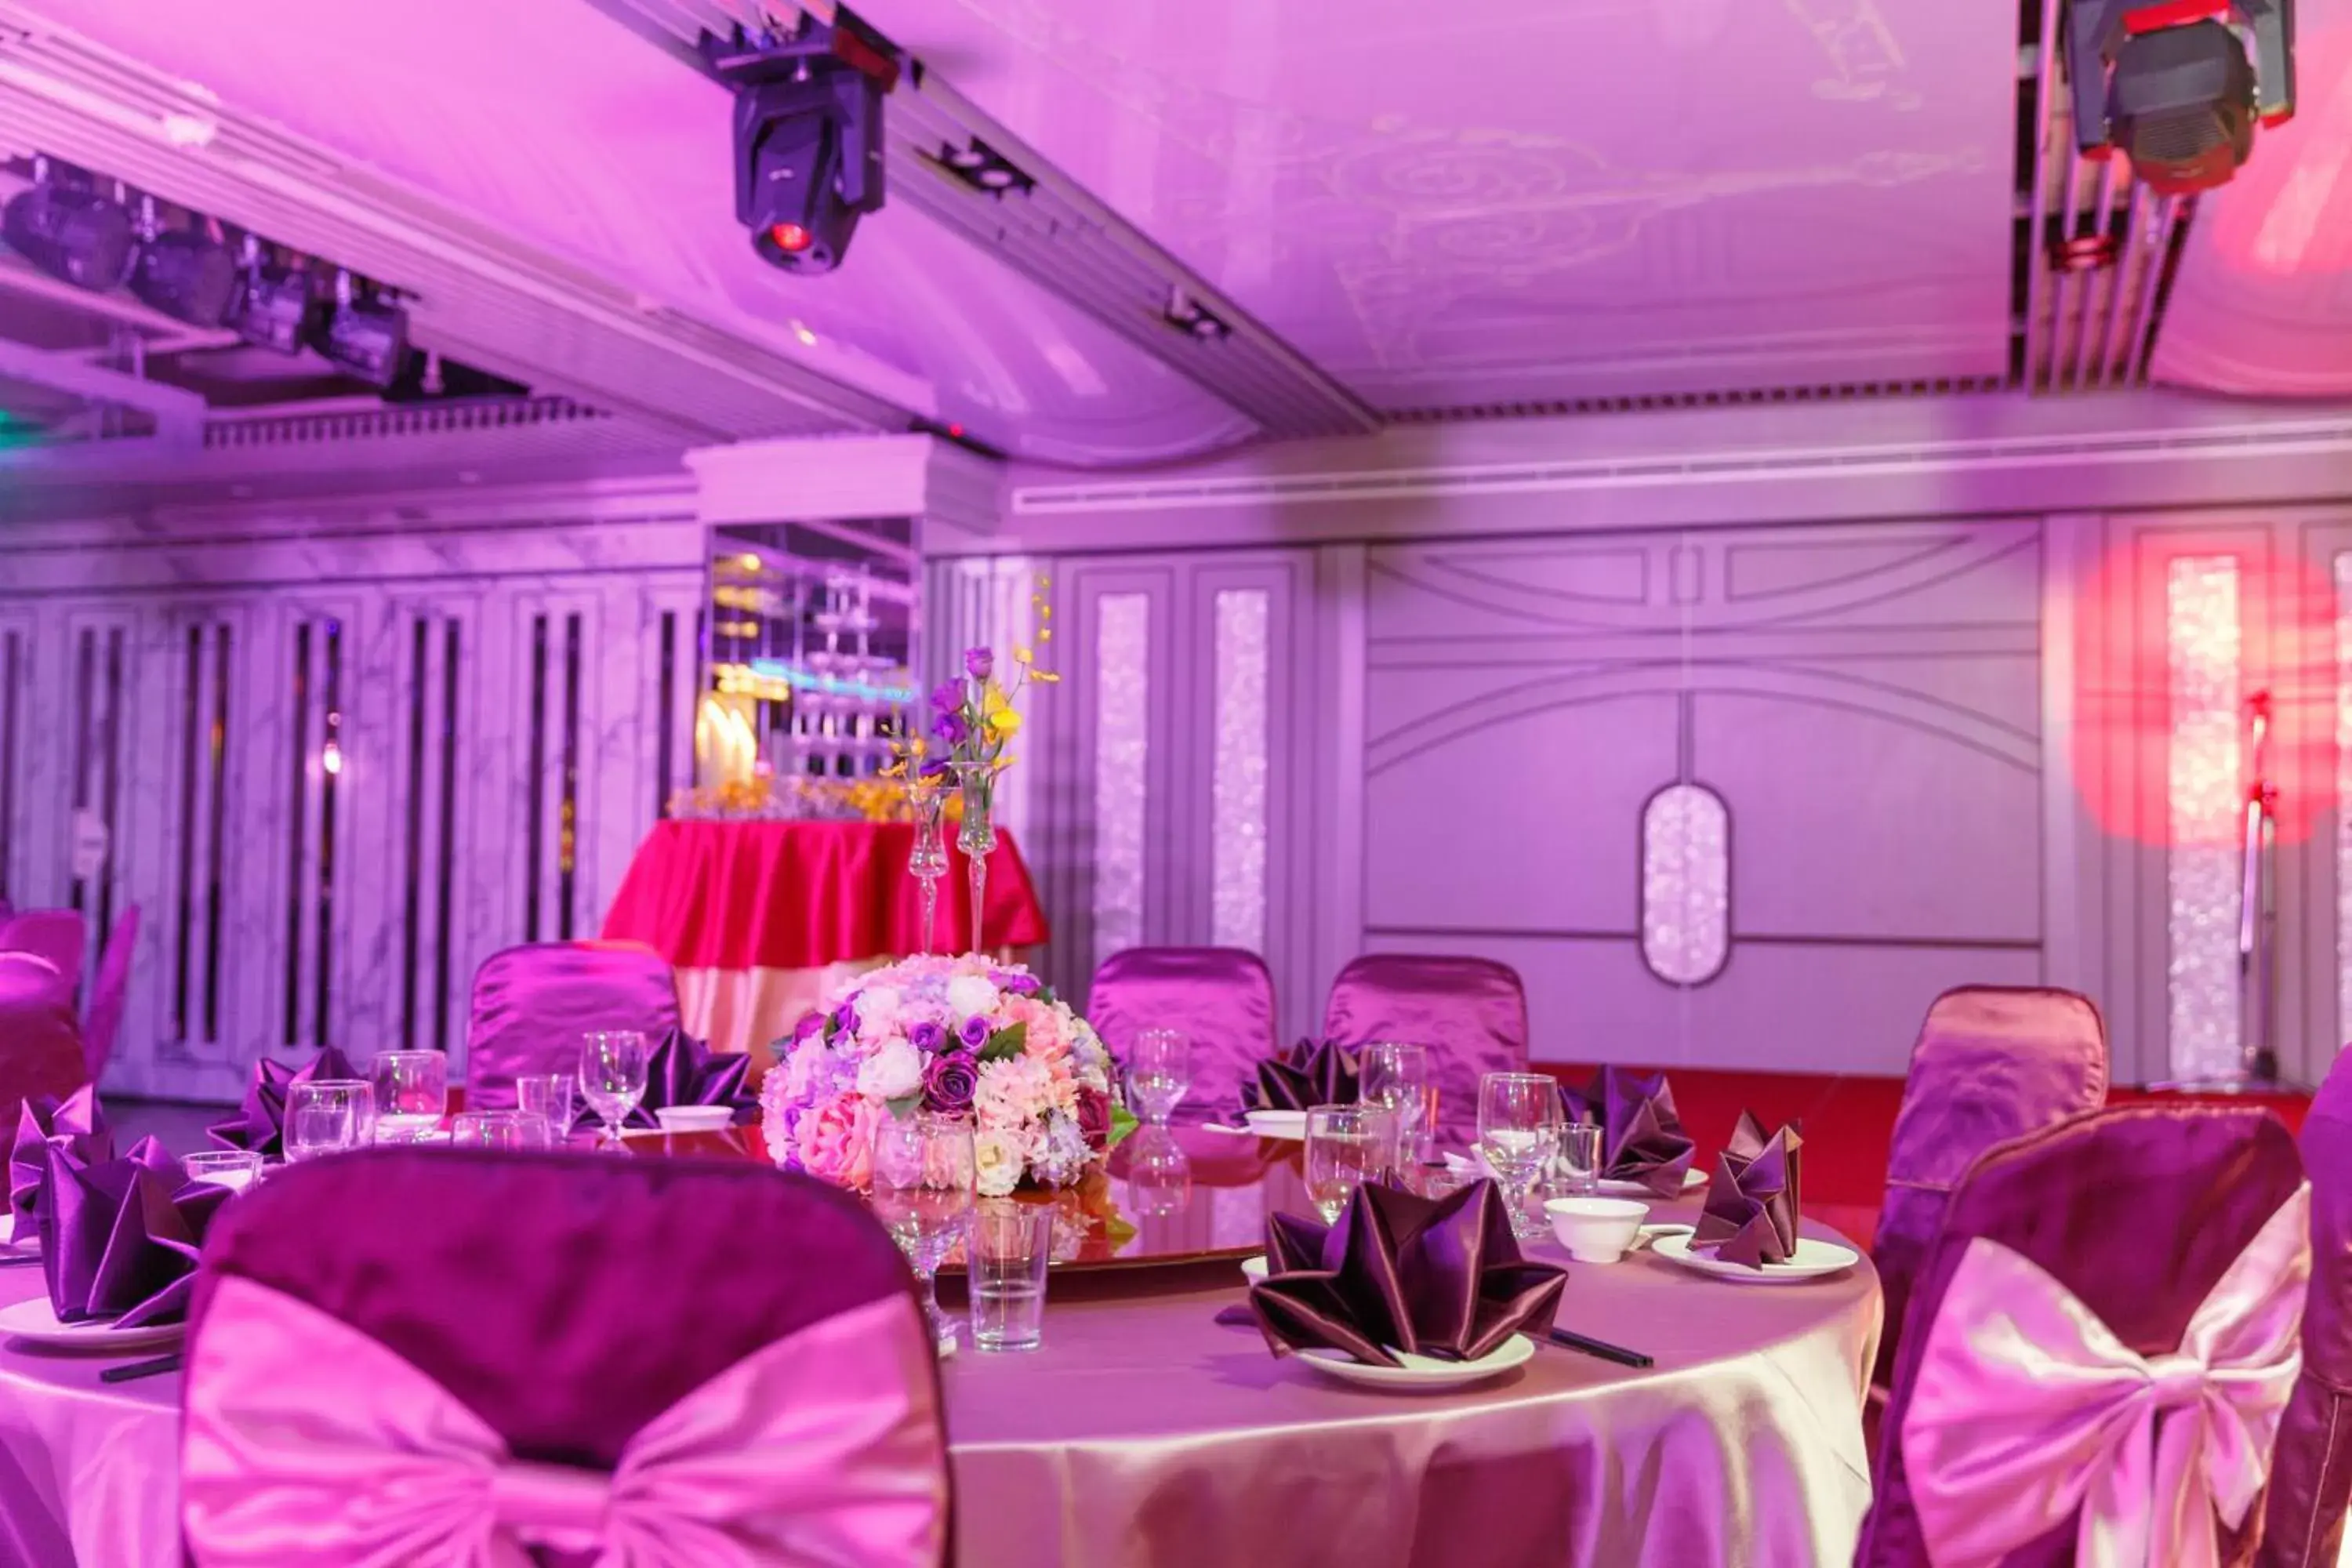 Banquet/Function facilities, Banquet Facilities in Royal Gold Hotel